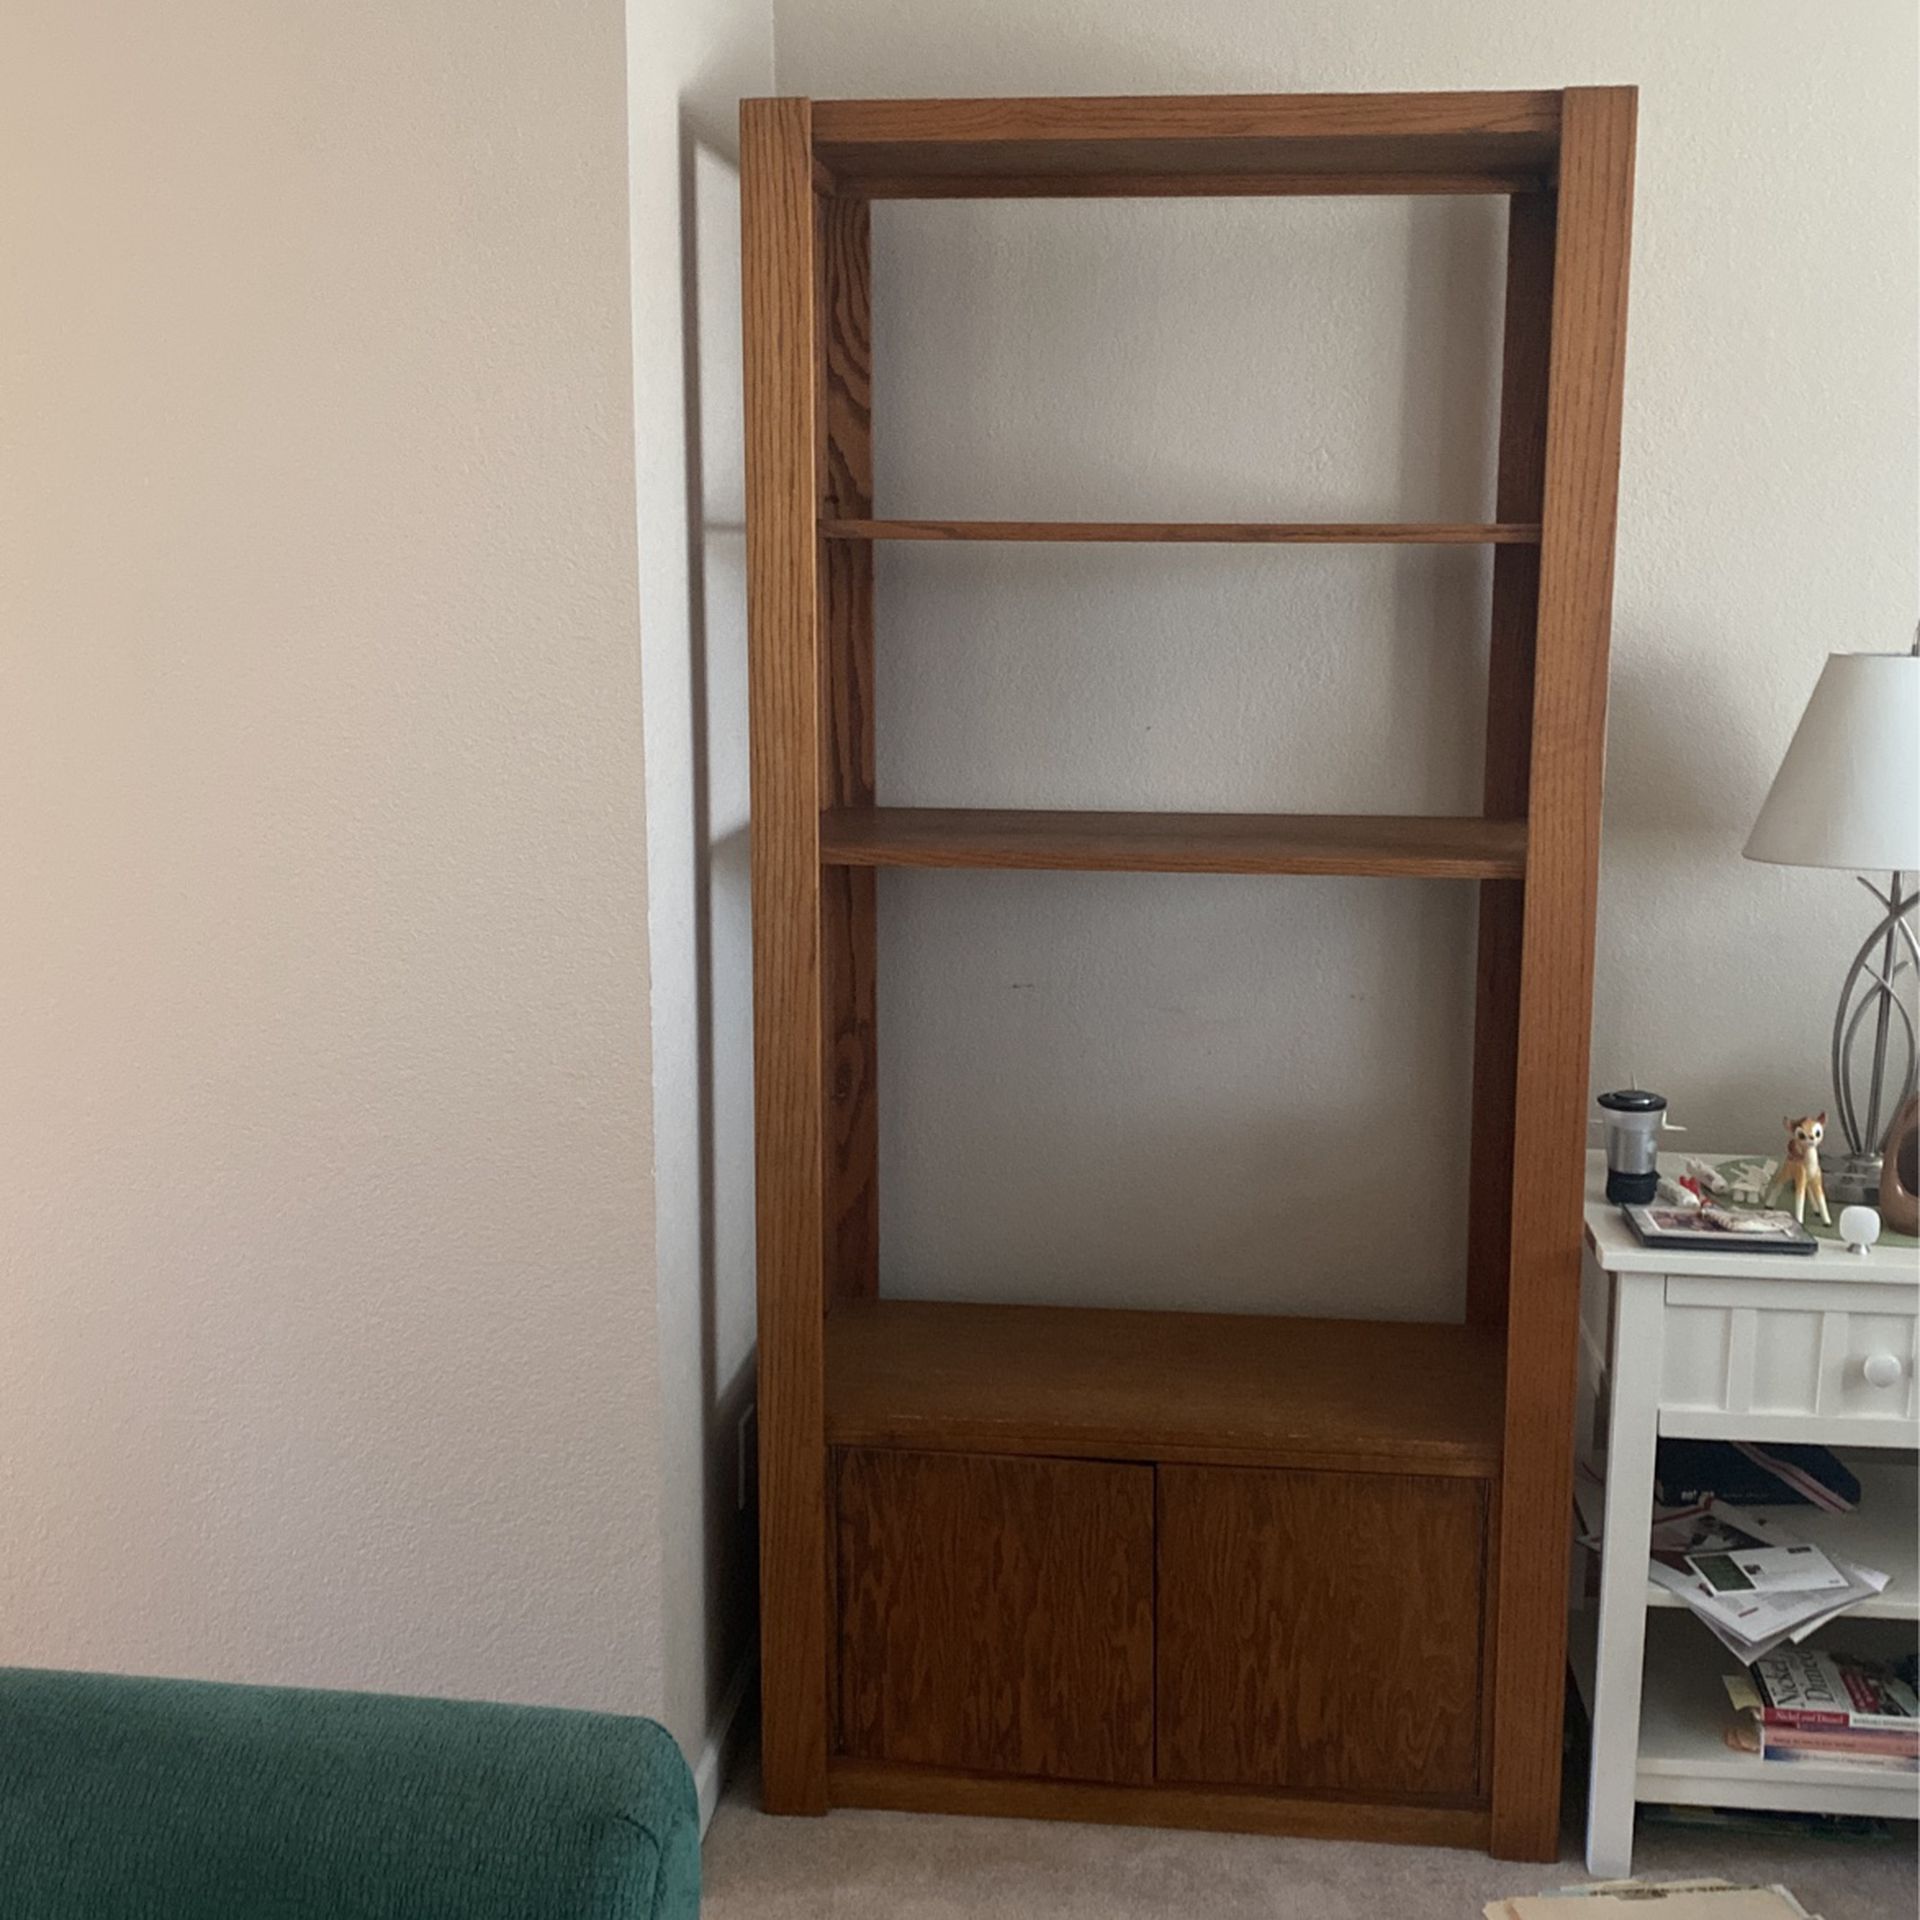 Oak Book Shelf With Bottom Cabinet